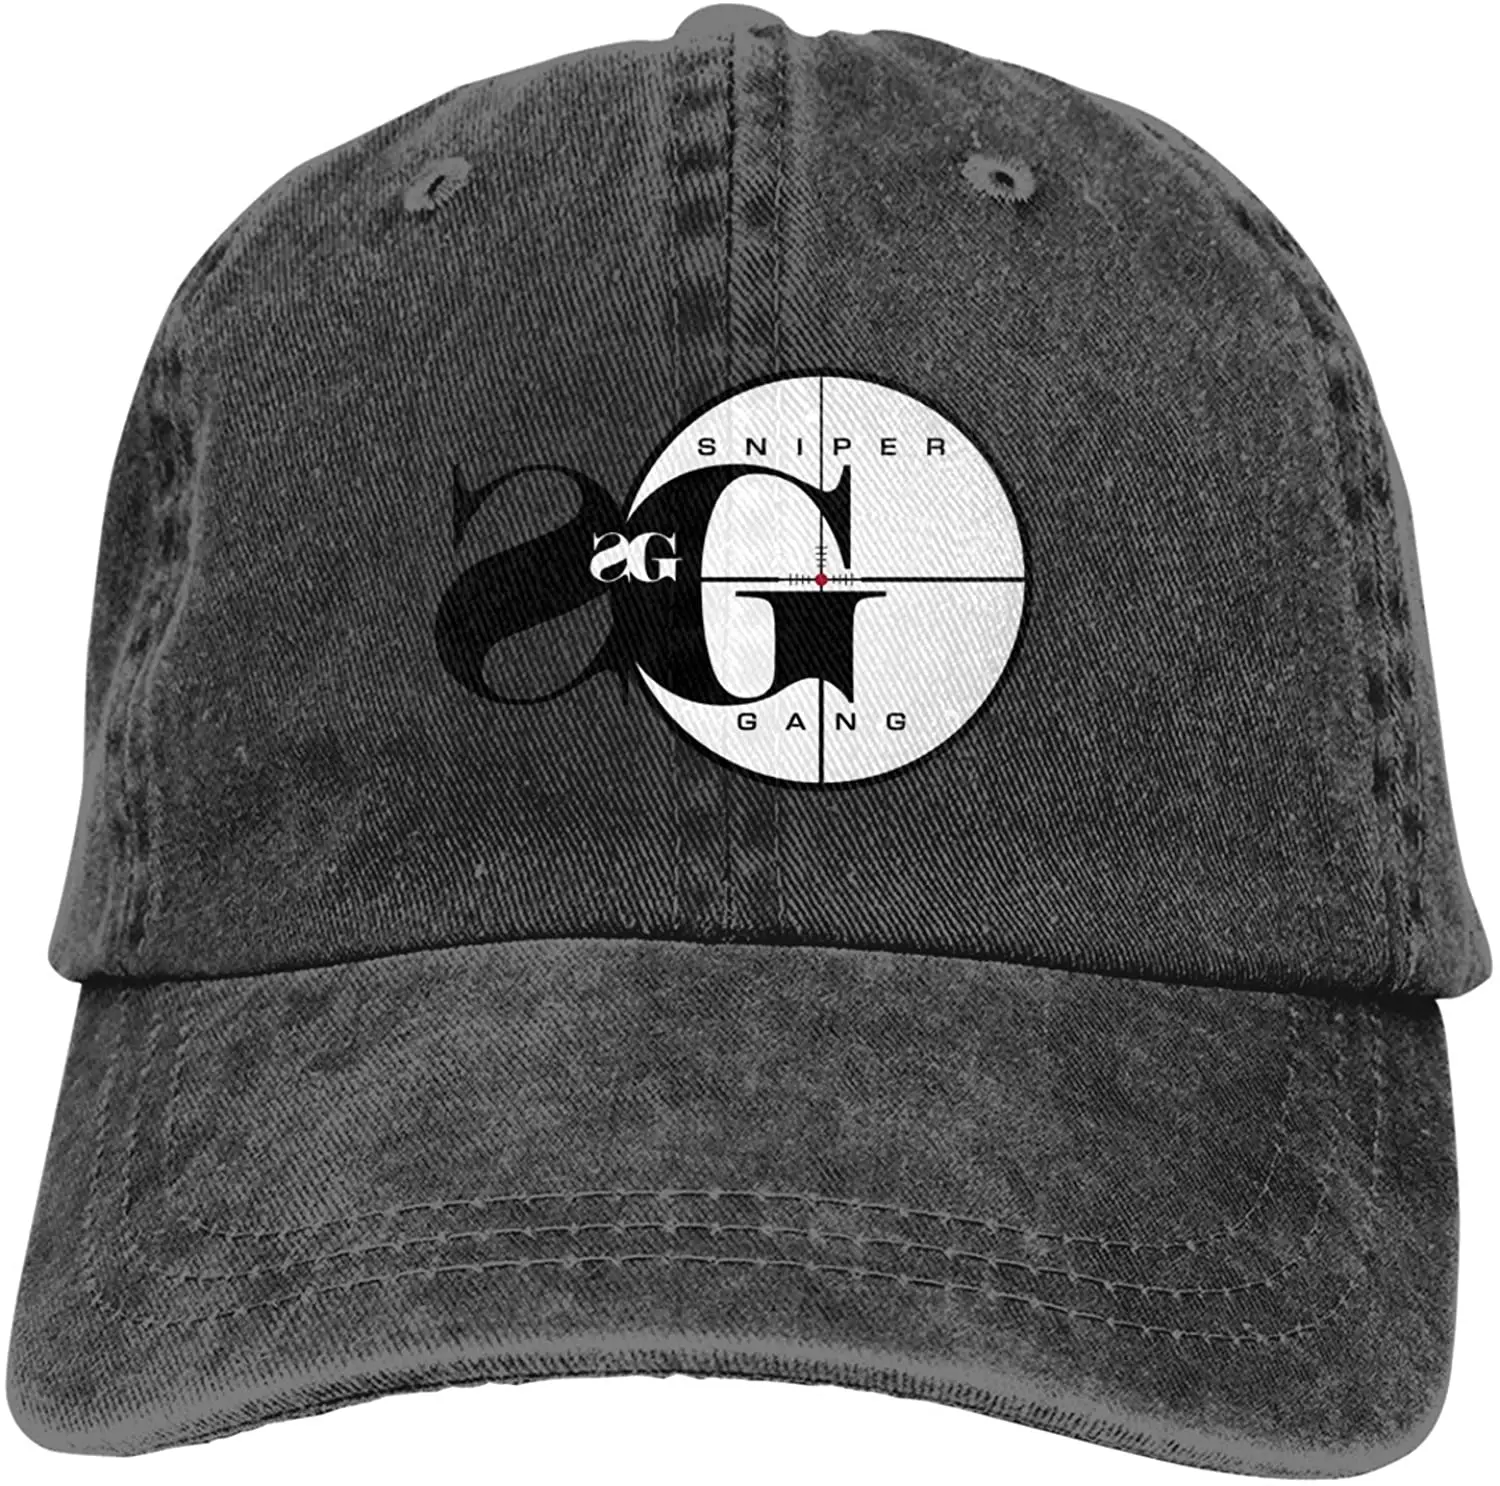 

Sniper Gang Denim Dad Hat Cotton Vintage Baseball Cap Jeans Casquette Adjustable Trucker Caps